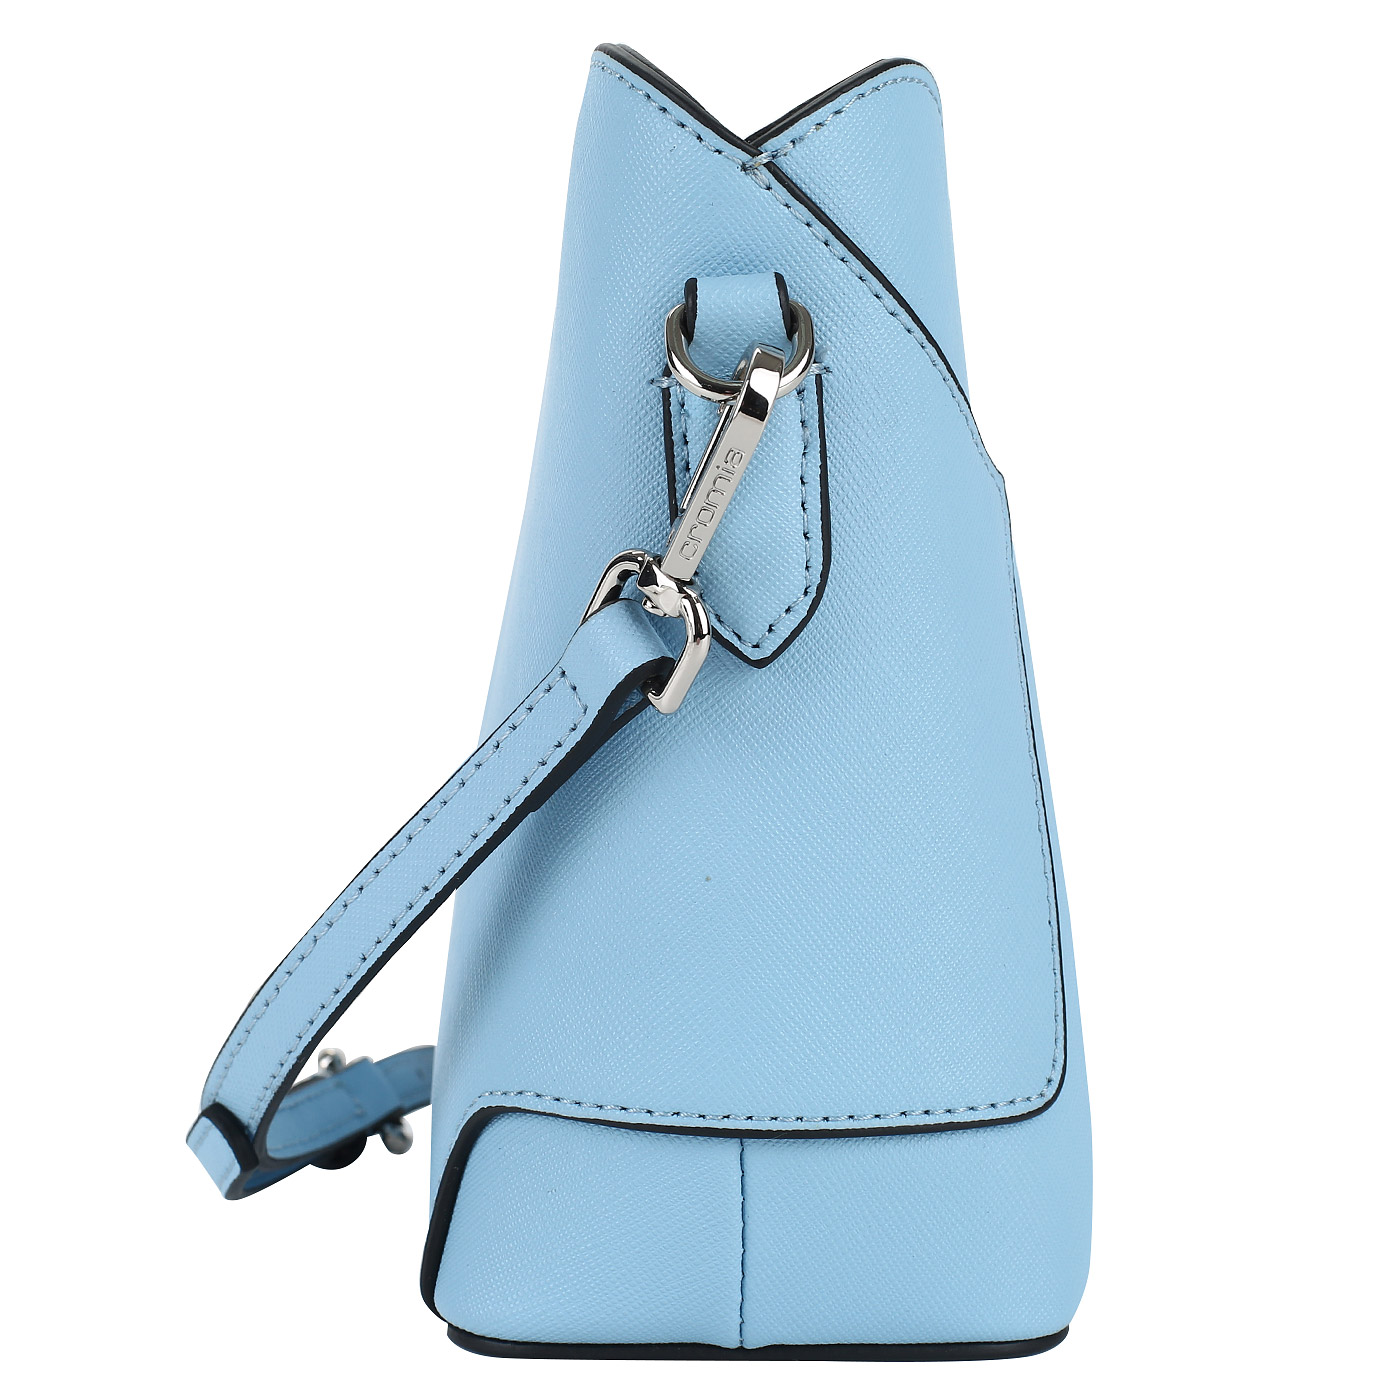 Аккуратная женская сумочка из сафьяна Cromia Wisper